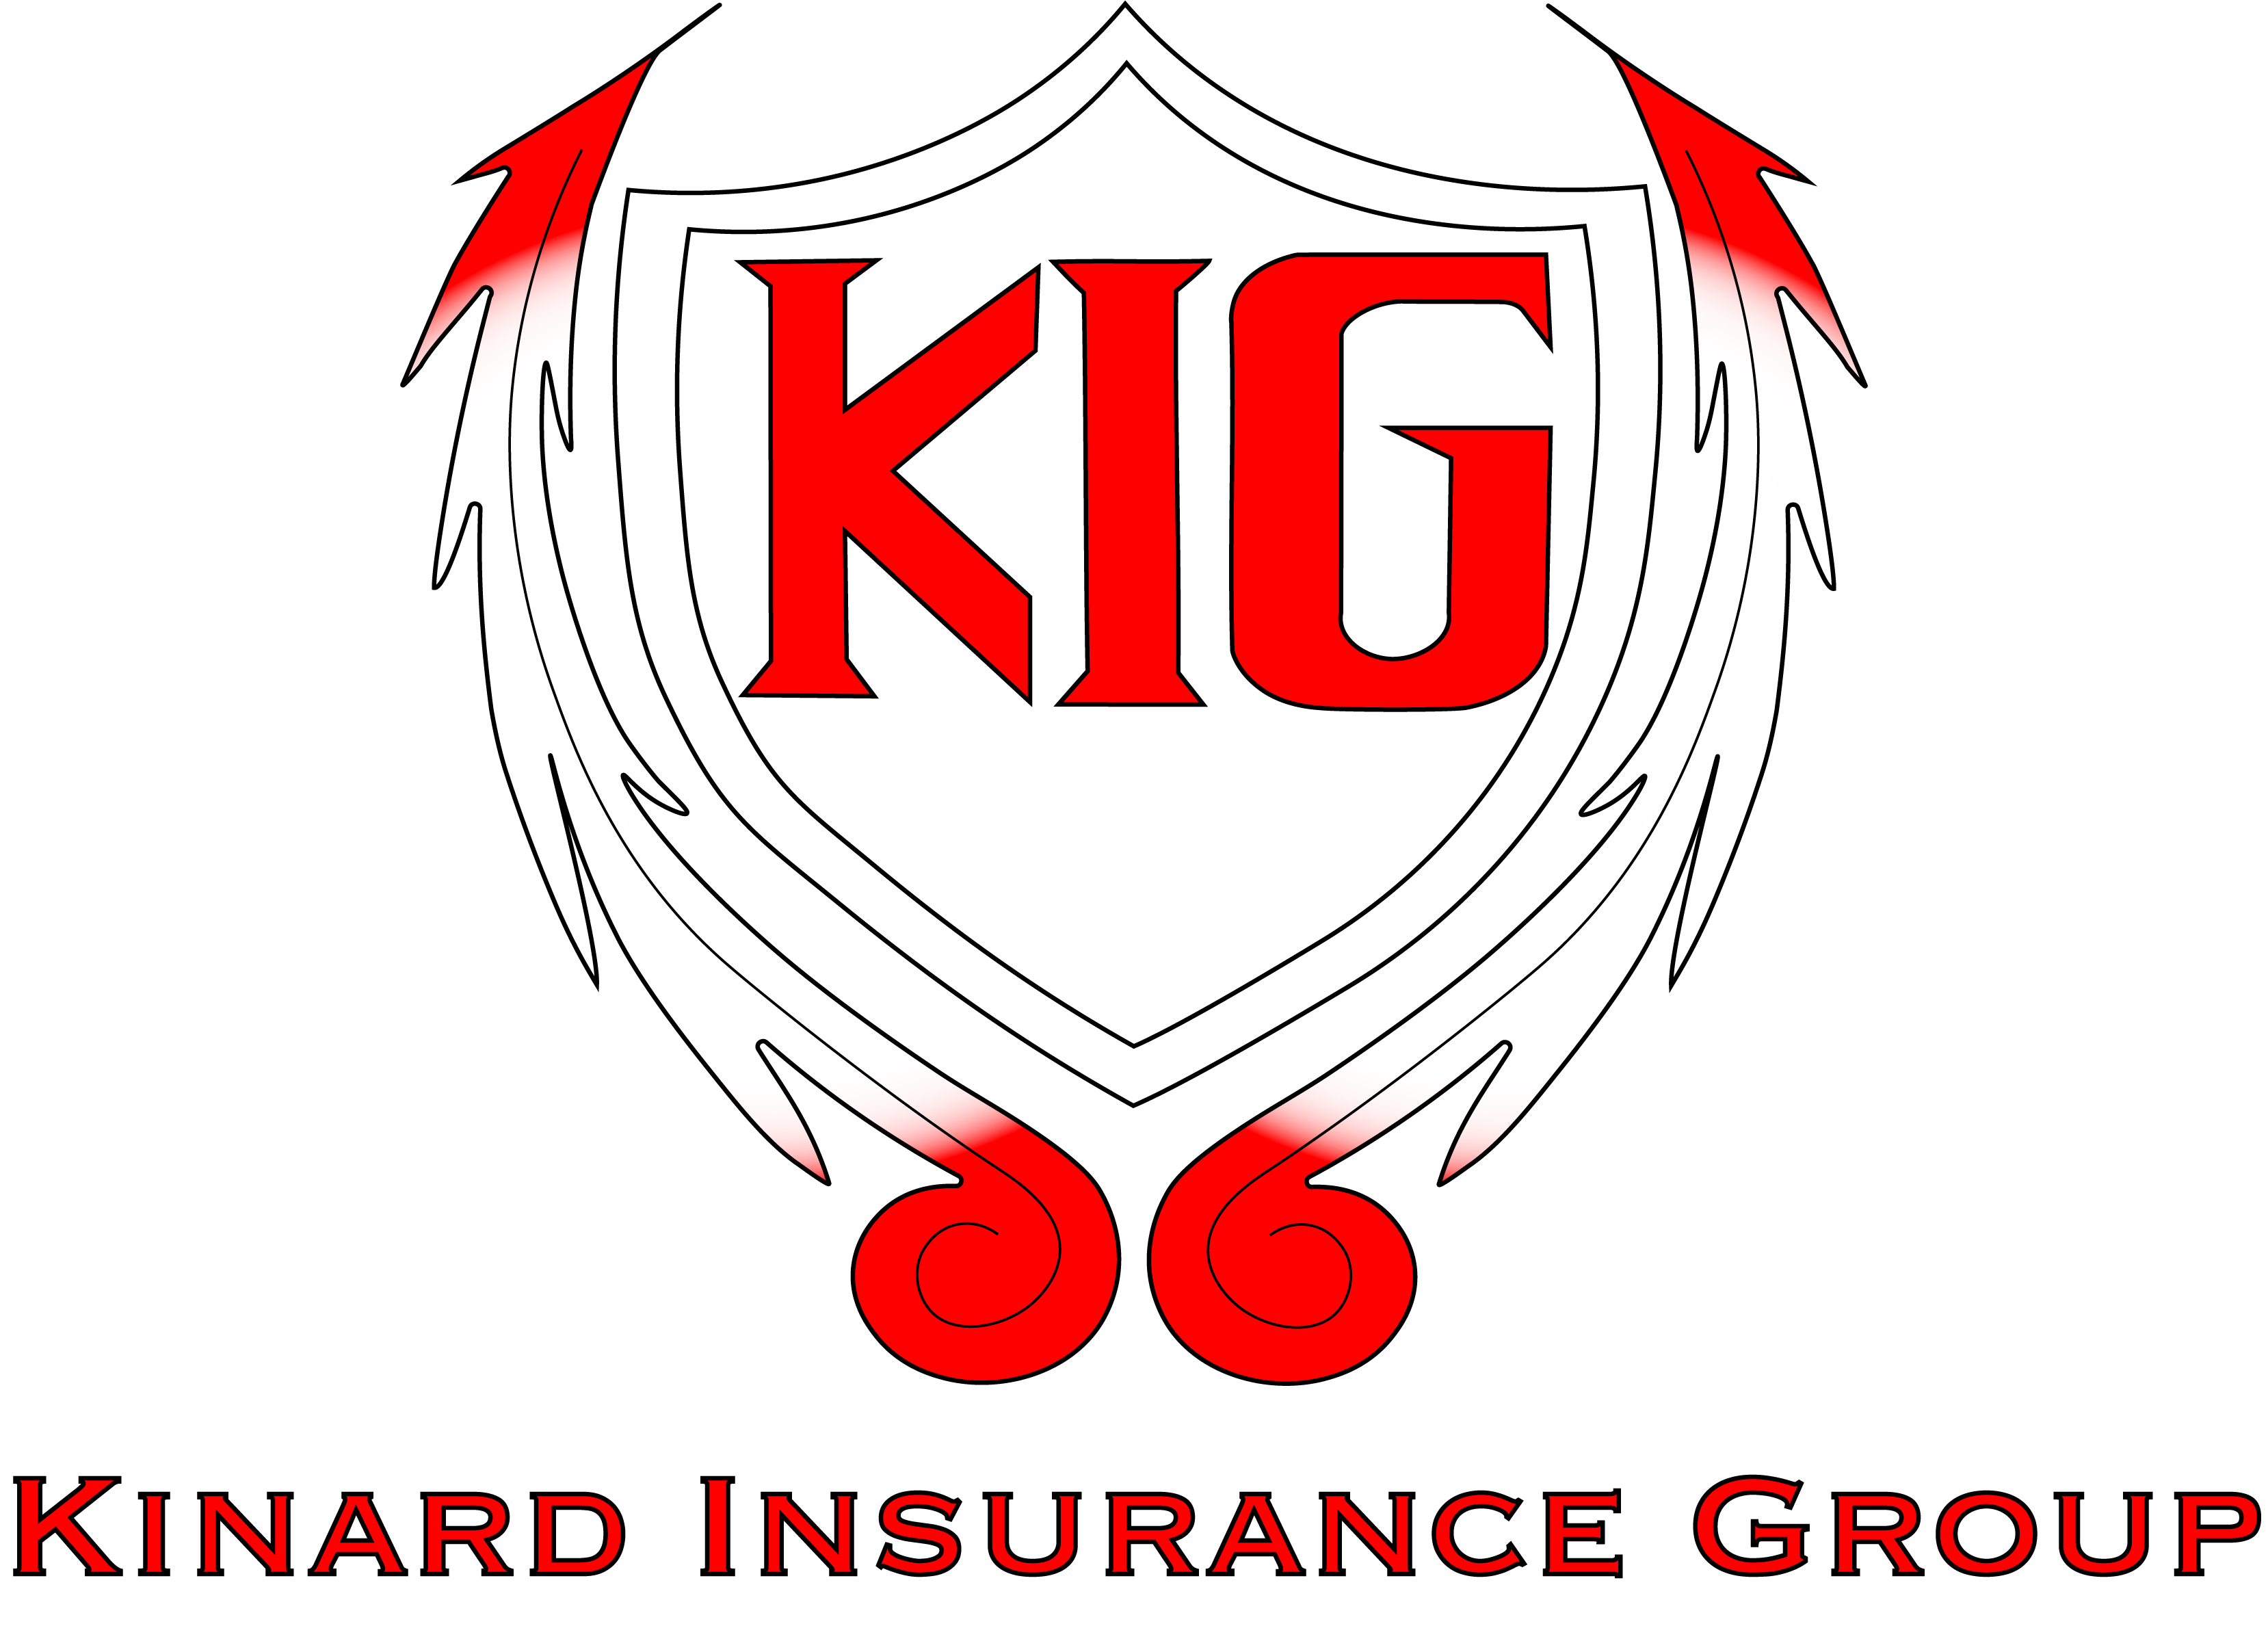 The Kinard Insurance Group